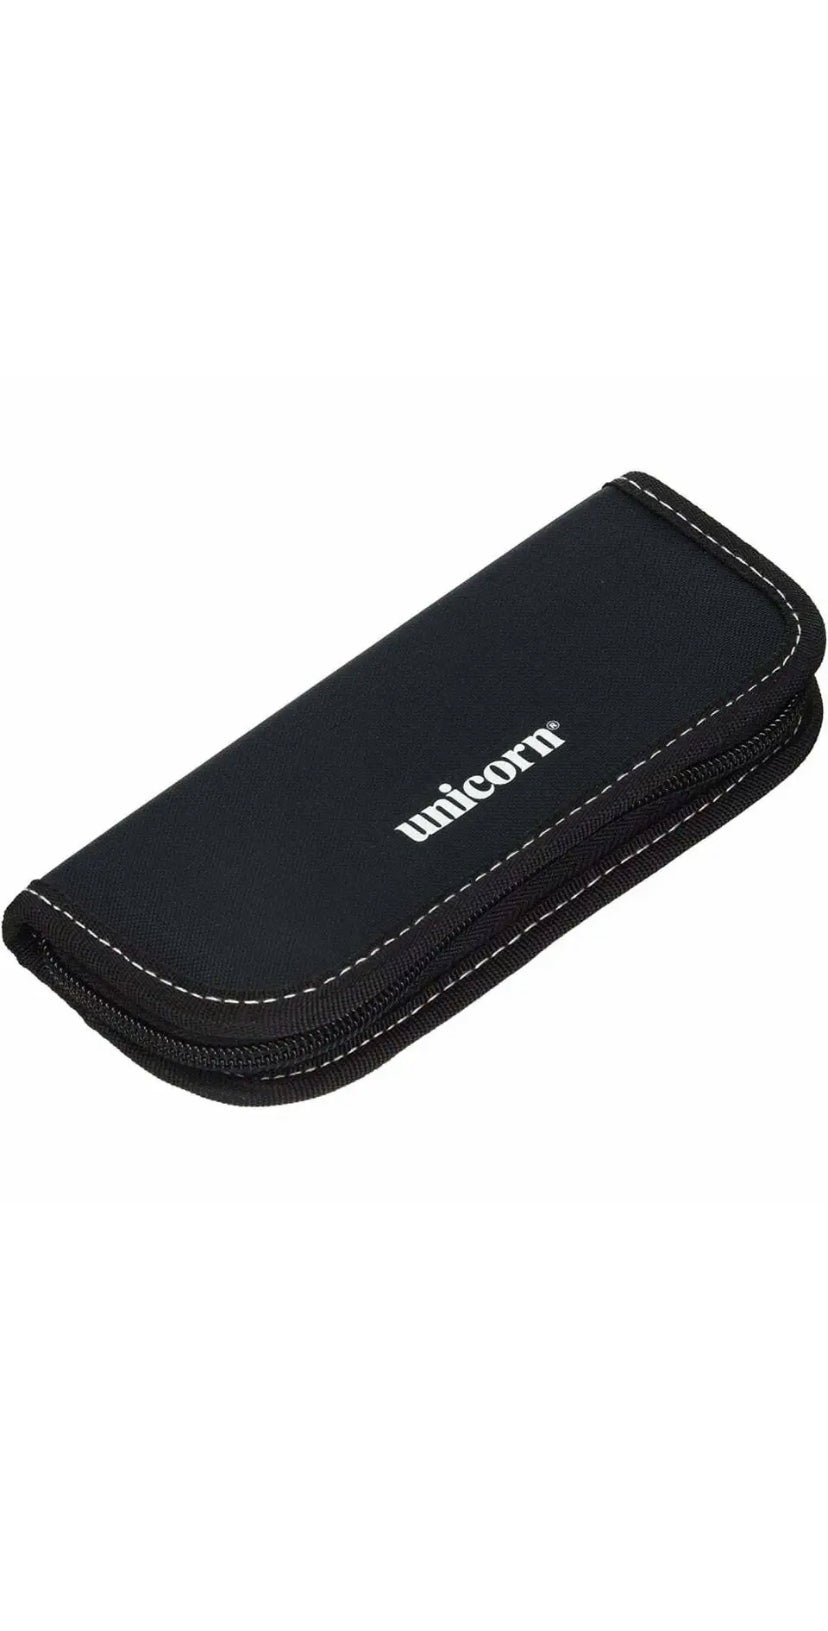 Unicorn Dart Wallet